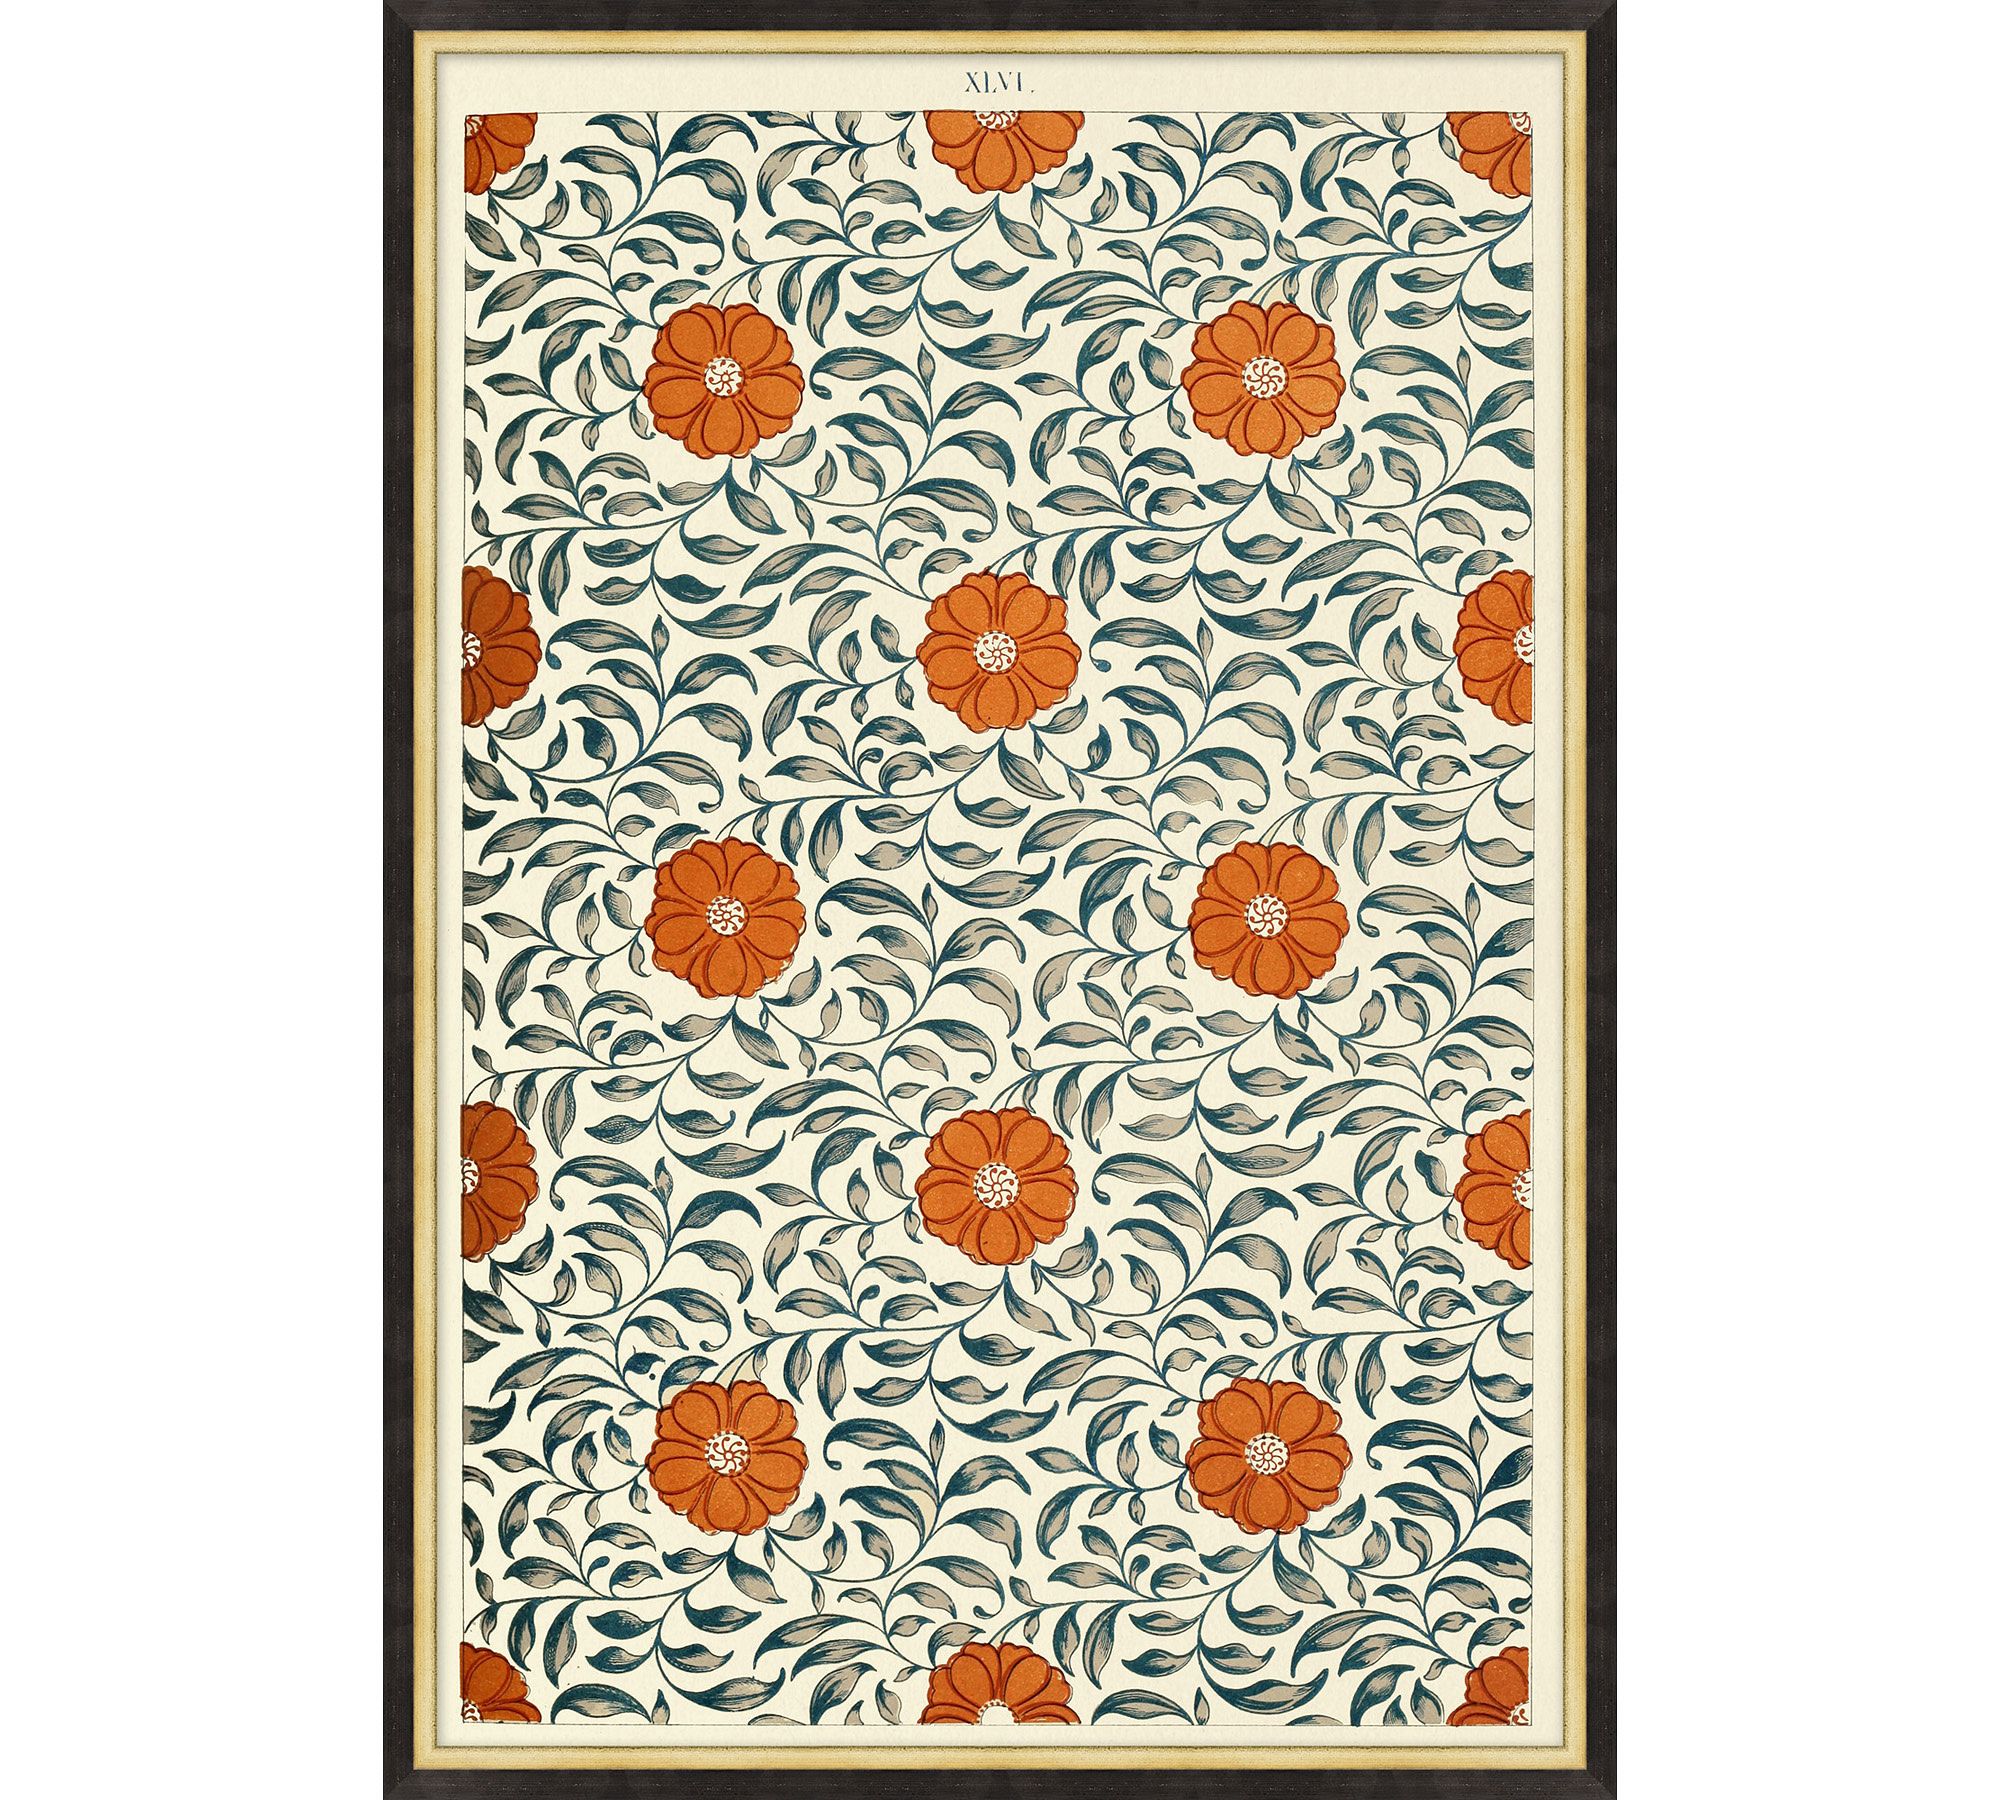 Flowers on Pattern Framed Print